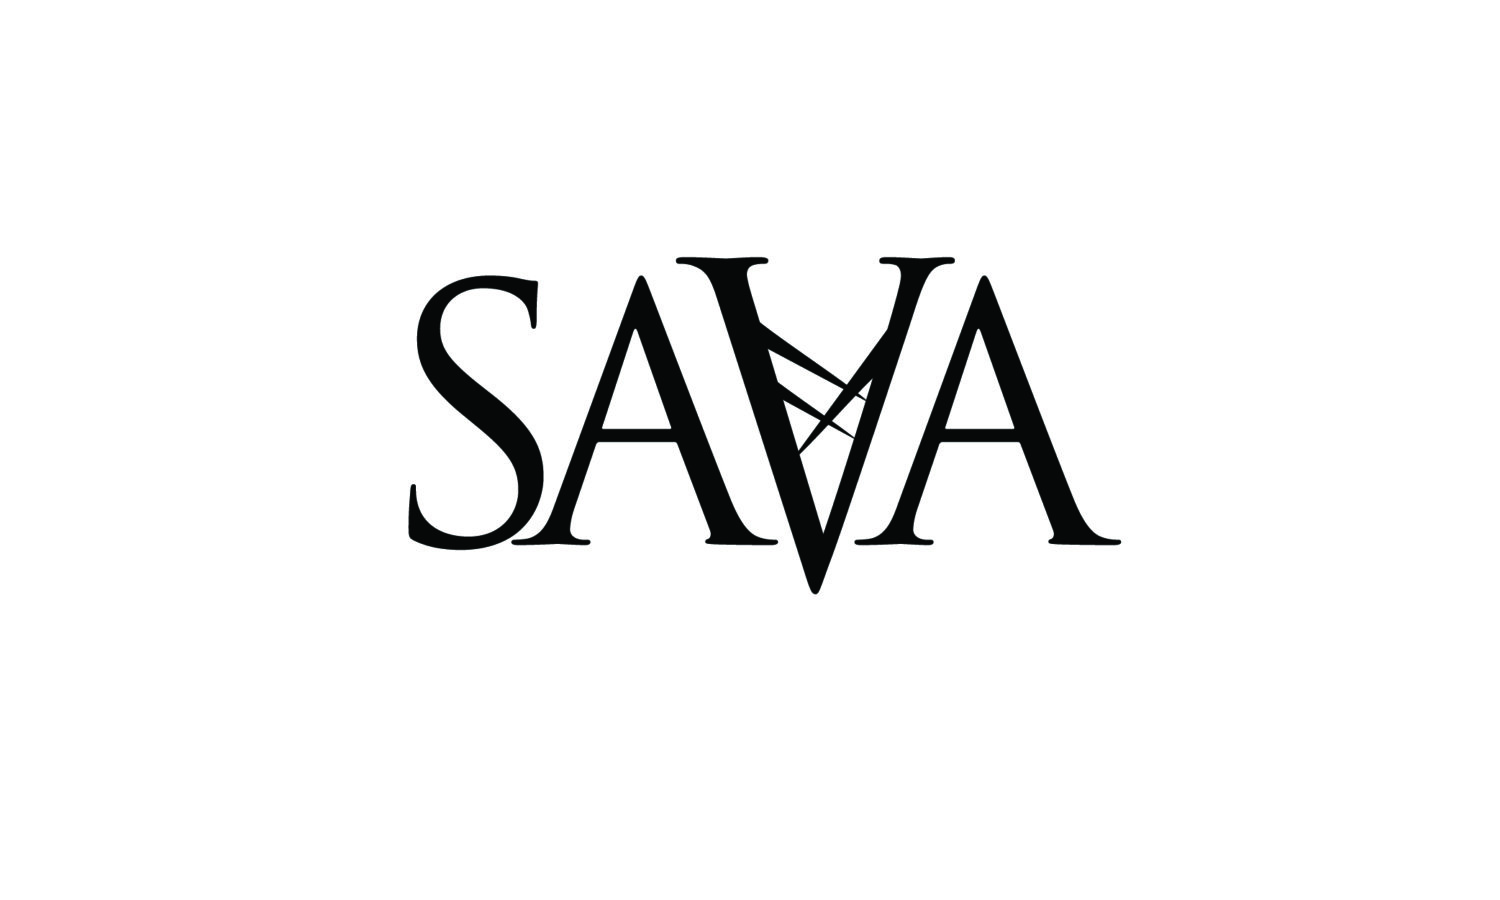 SAVA logo